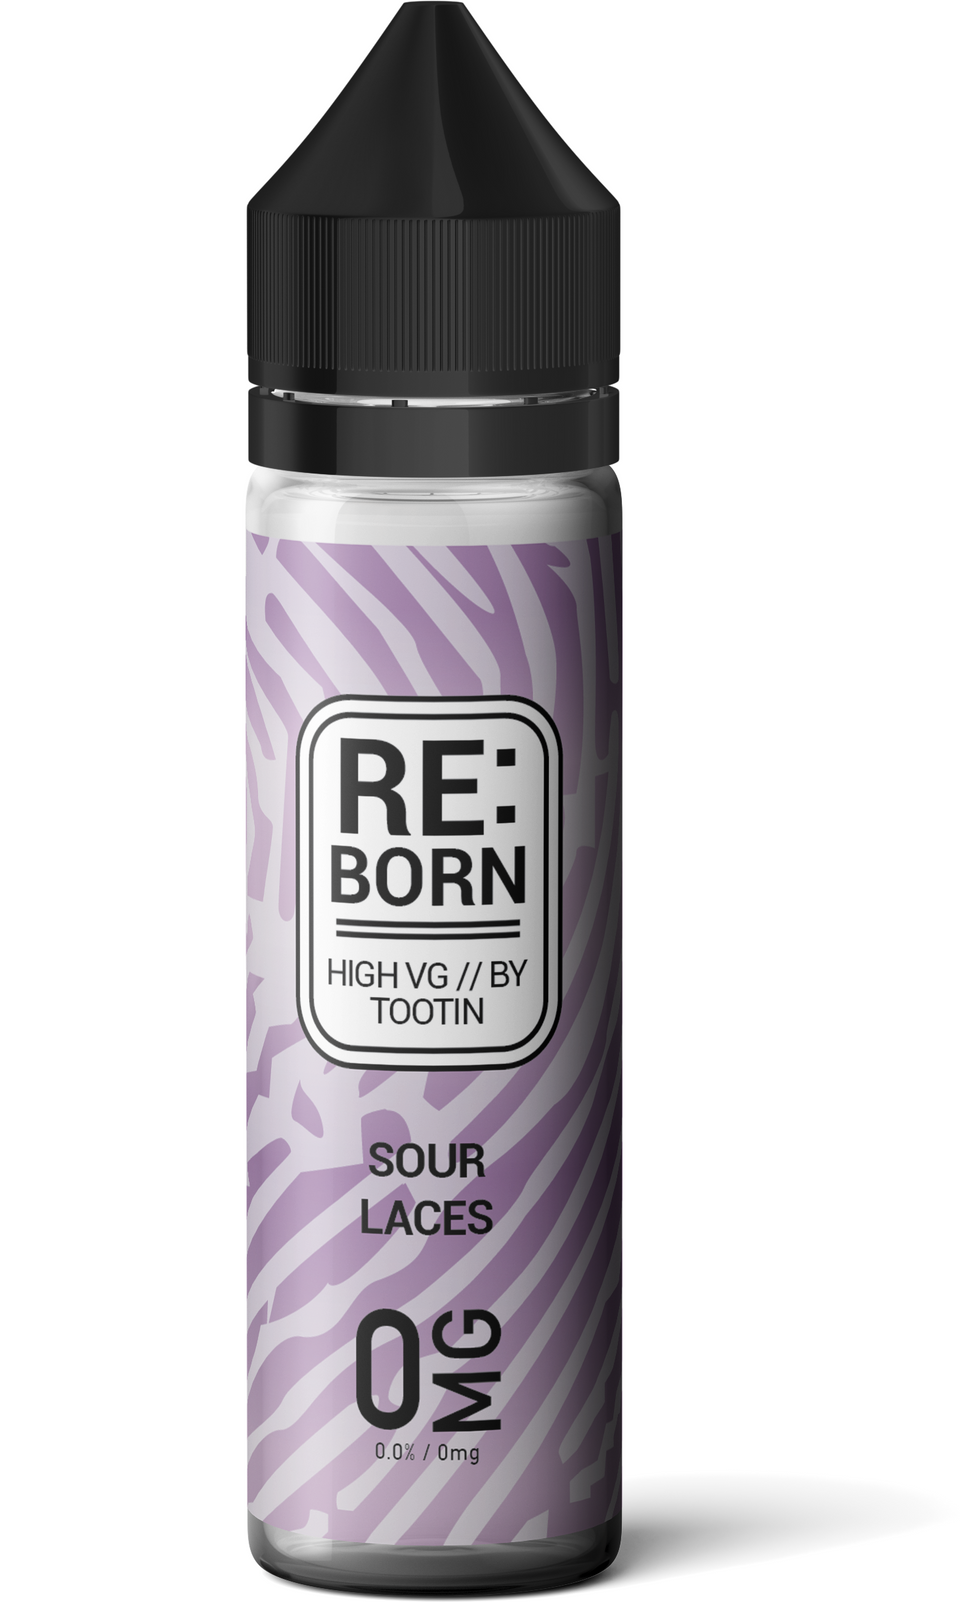 RE:Born - Sour Laces - 0mg - 50ml shortfill - ASPIRE UK